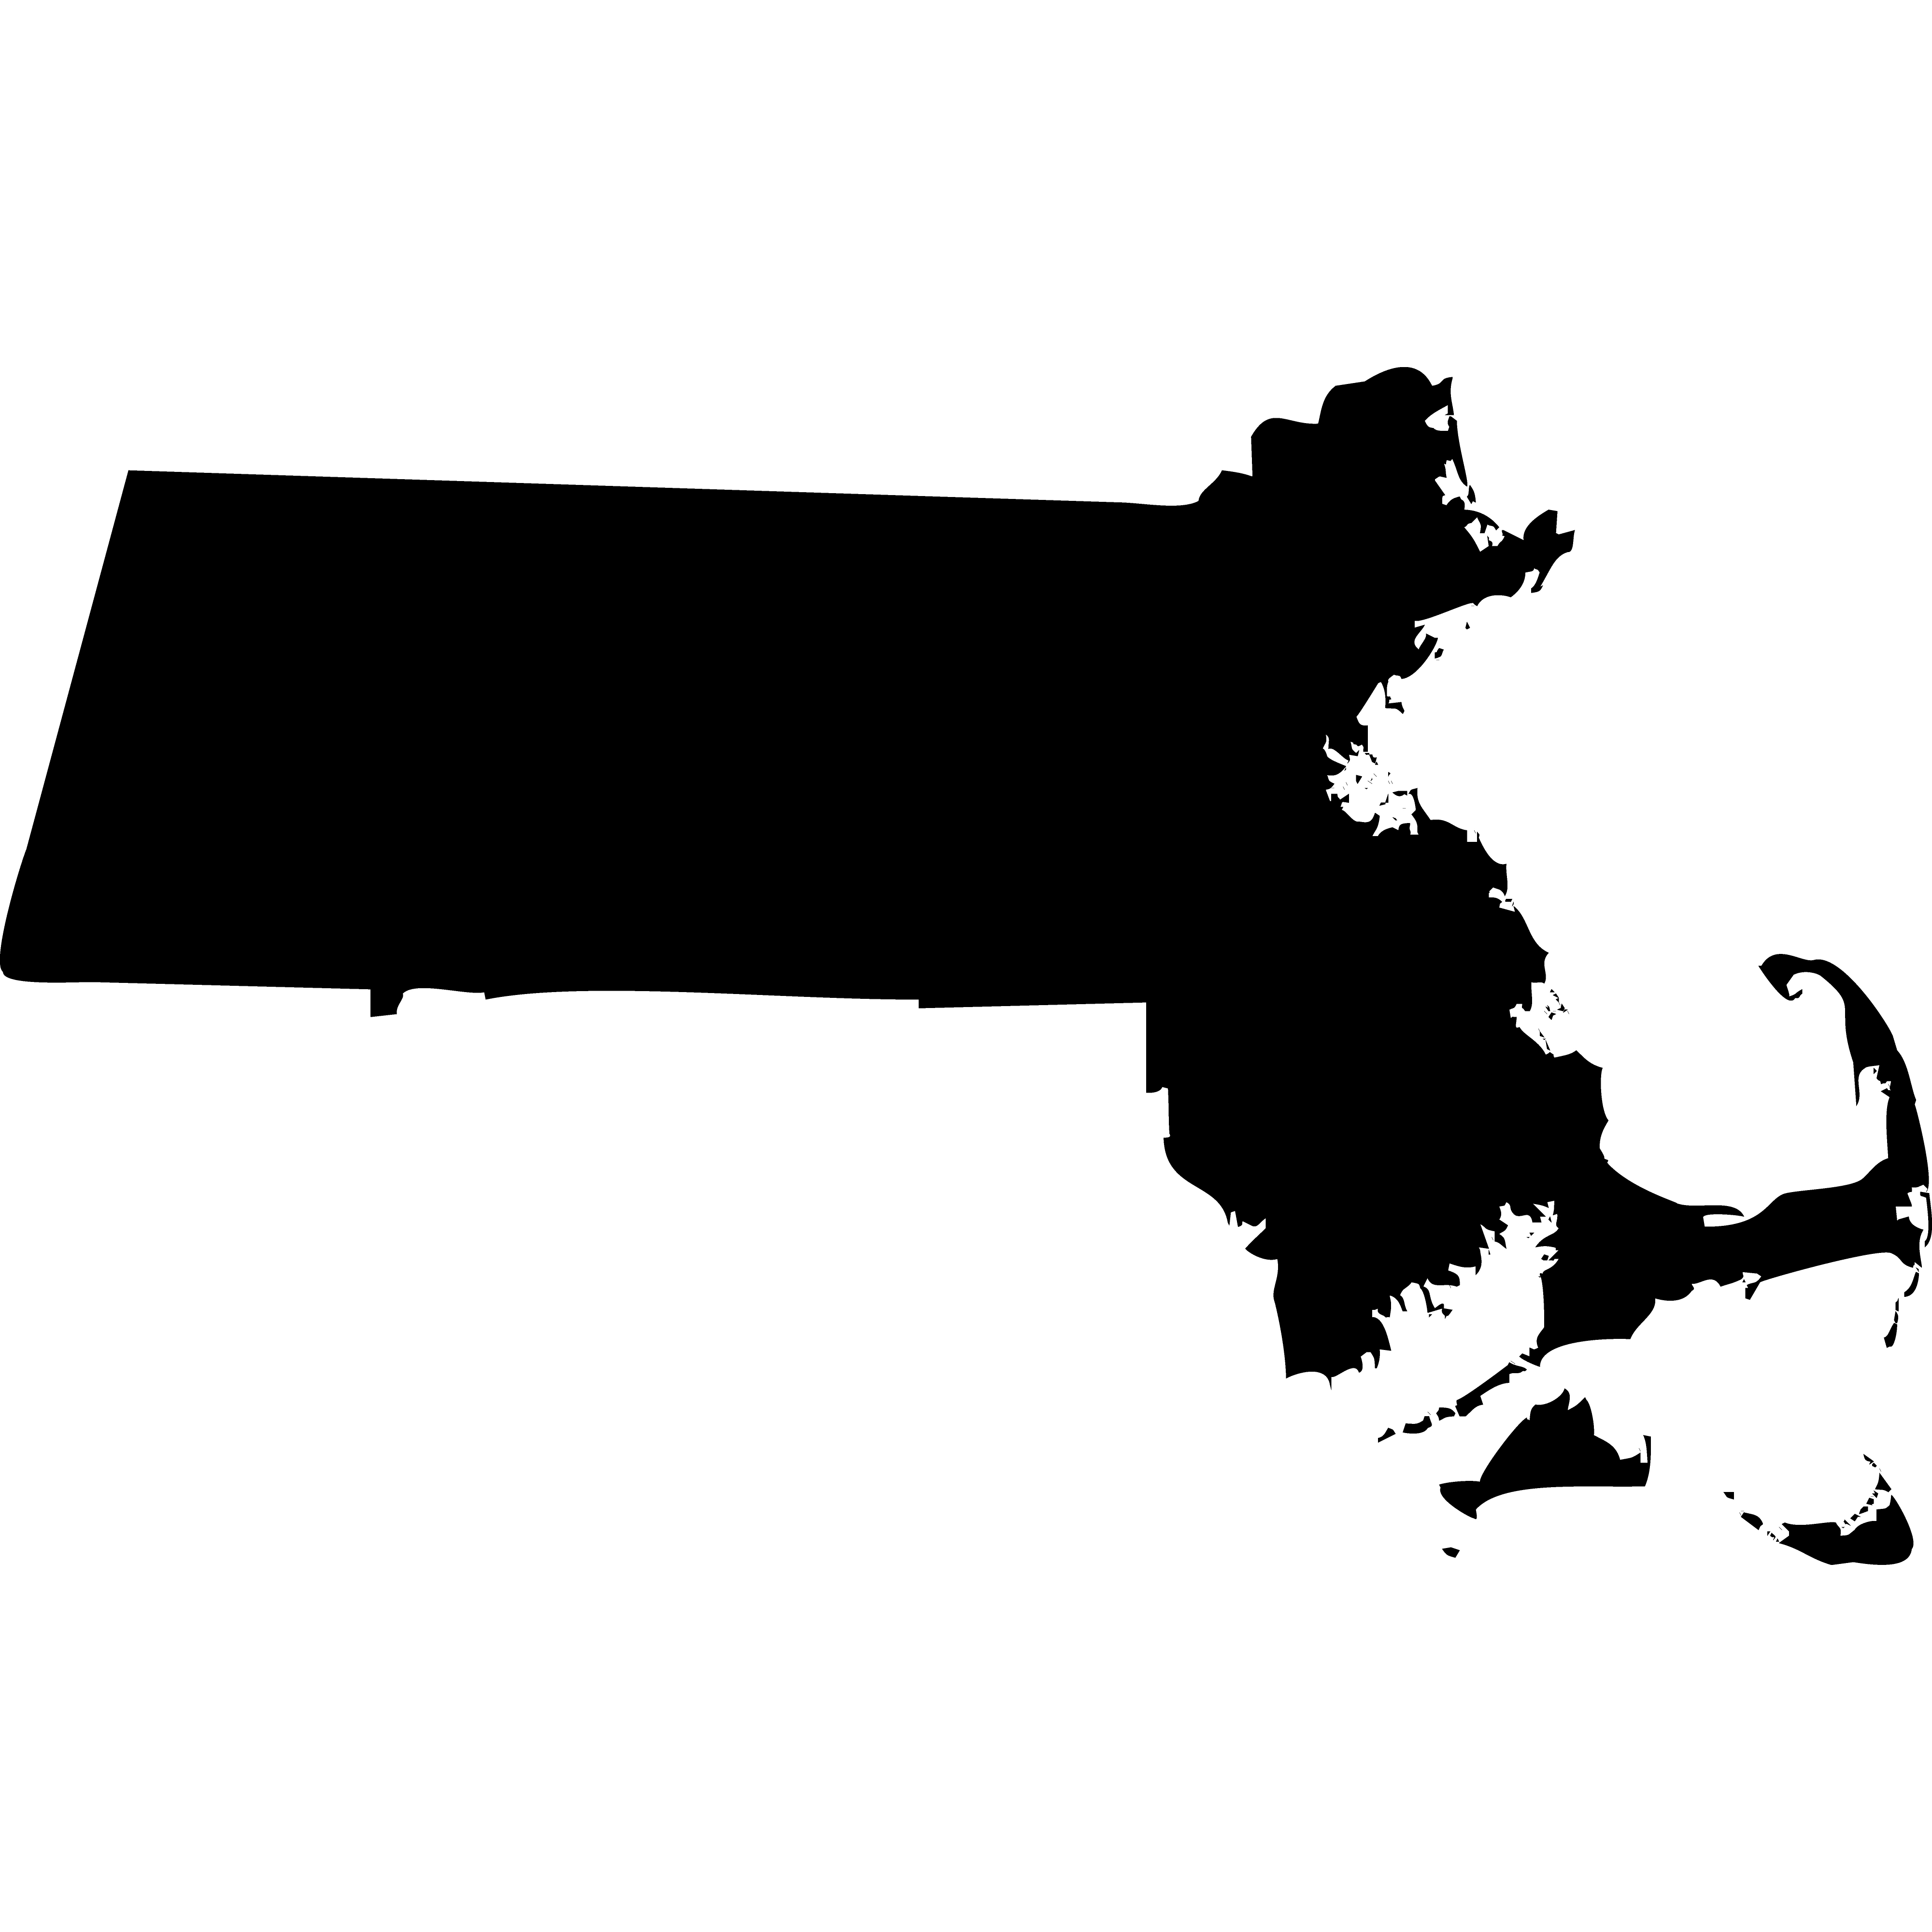 Simple black graphic of Massachusetts